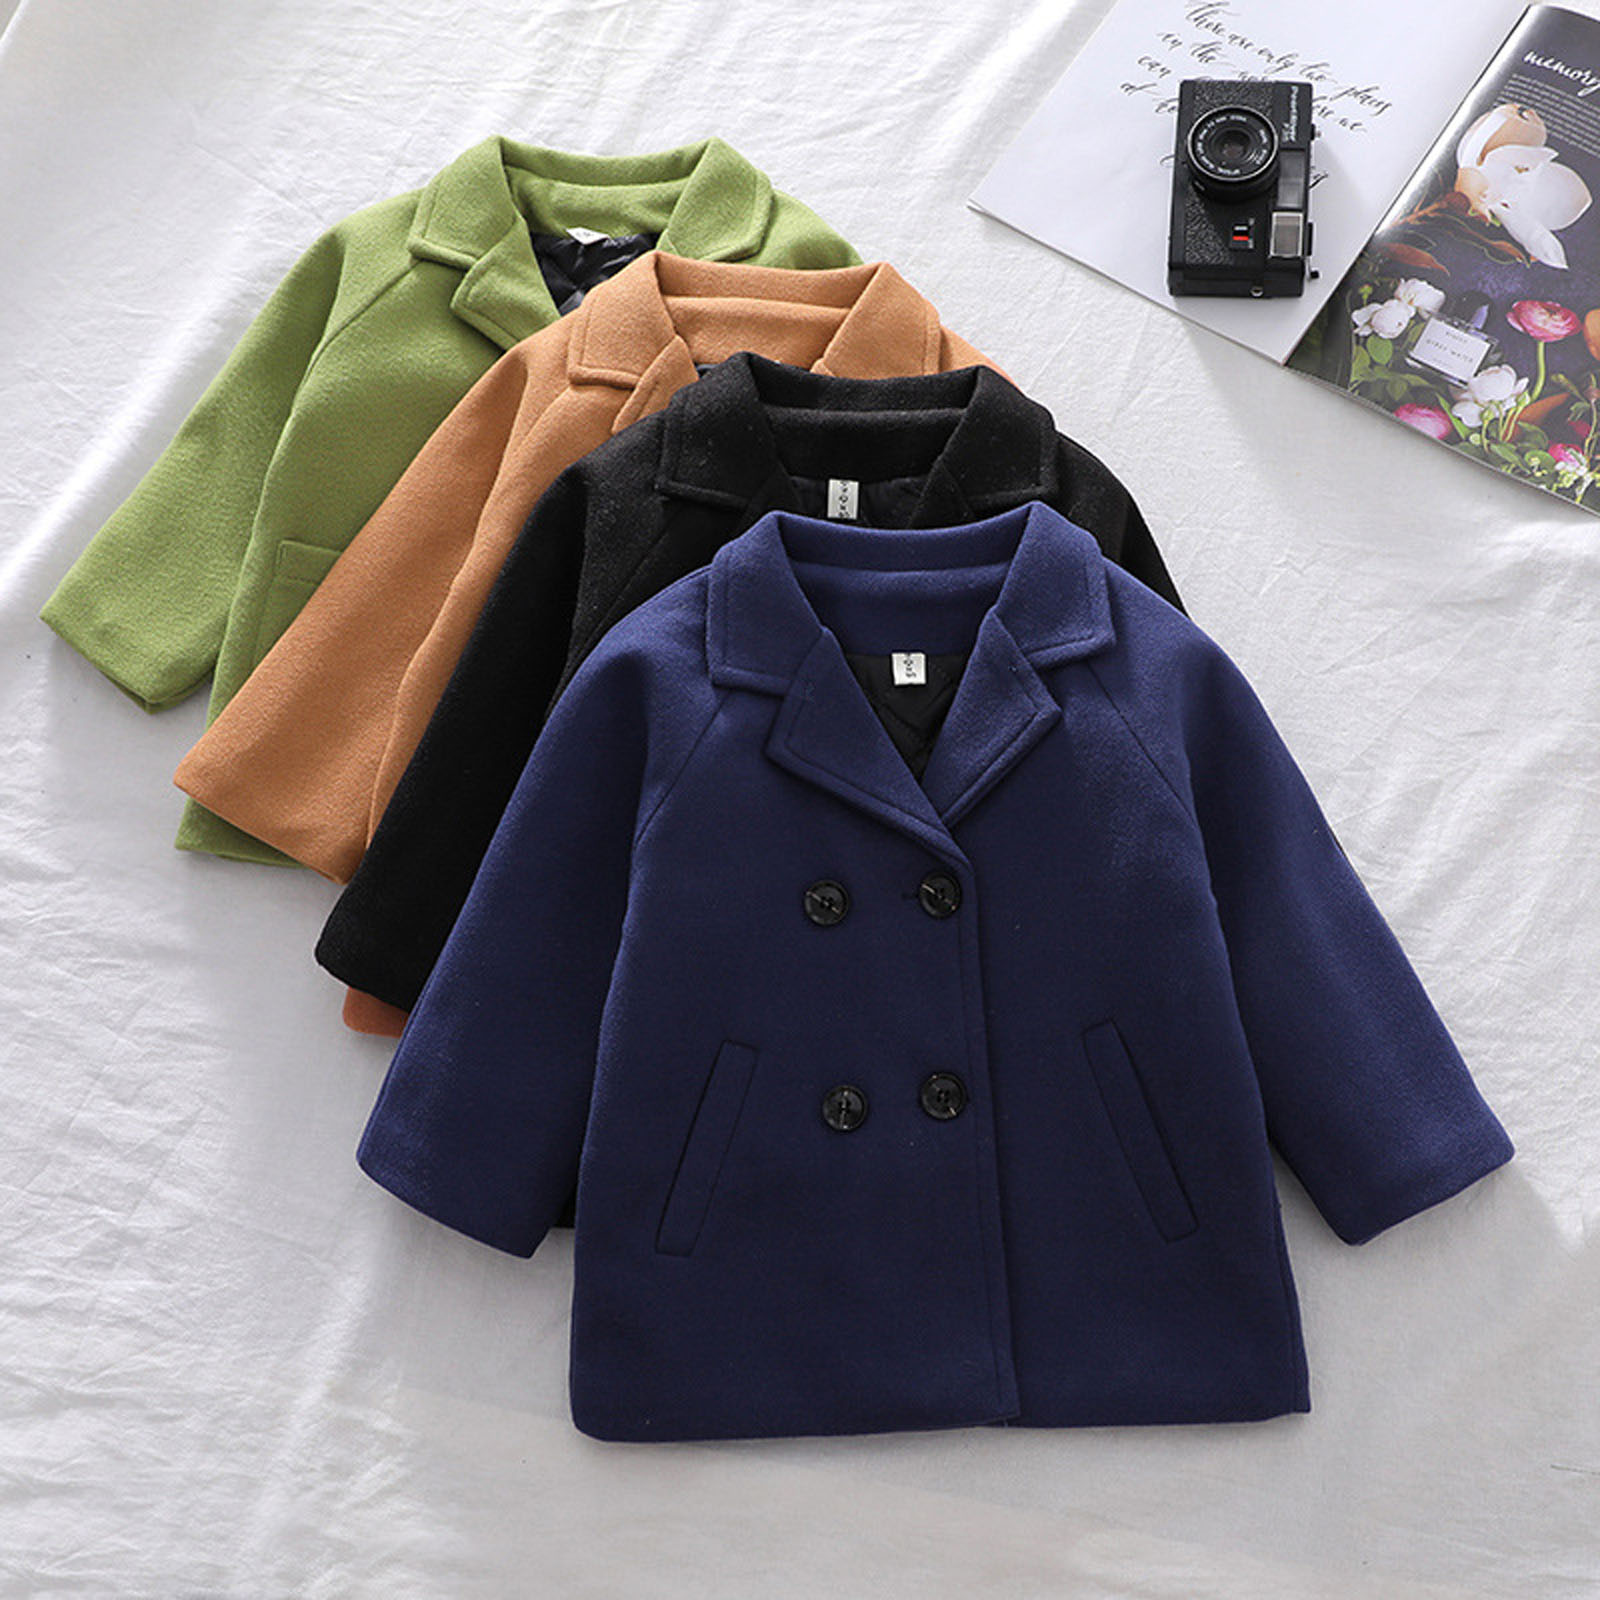 Meihuid Baby Boys Girls Wool Coat Winter Warm Double Breasted Trench Coat Jacket Outwear - image 5 of 6